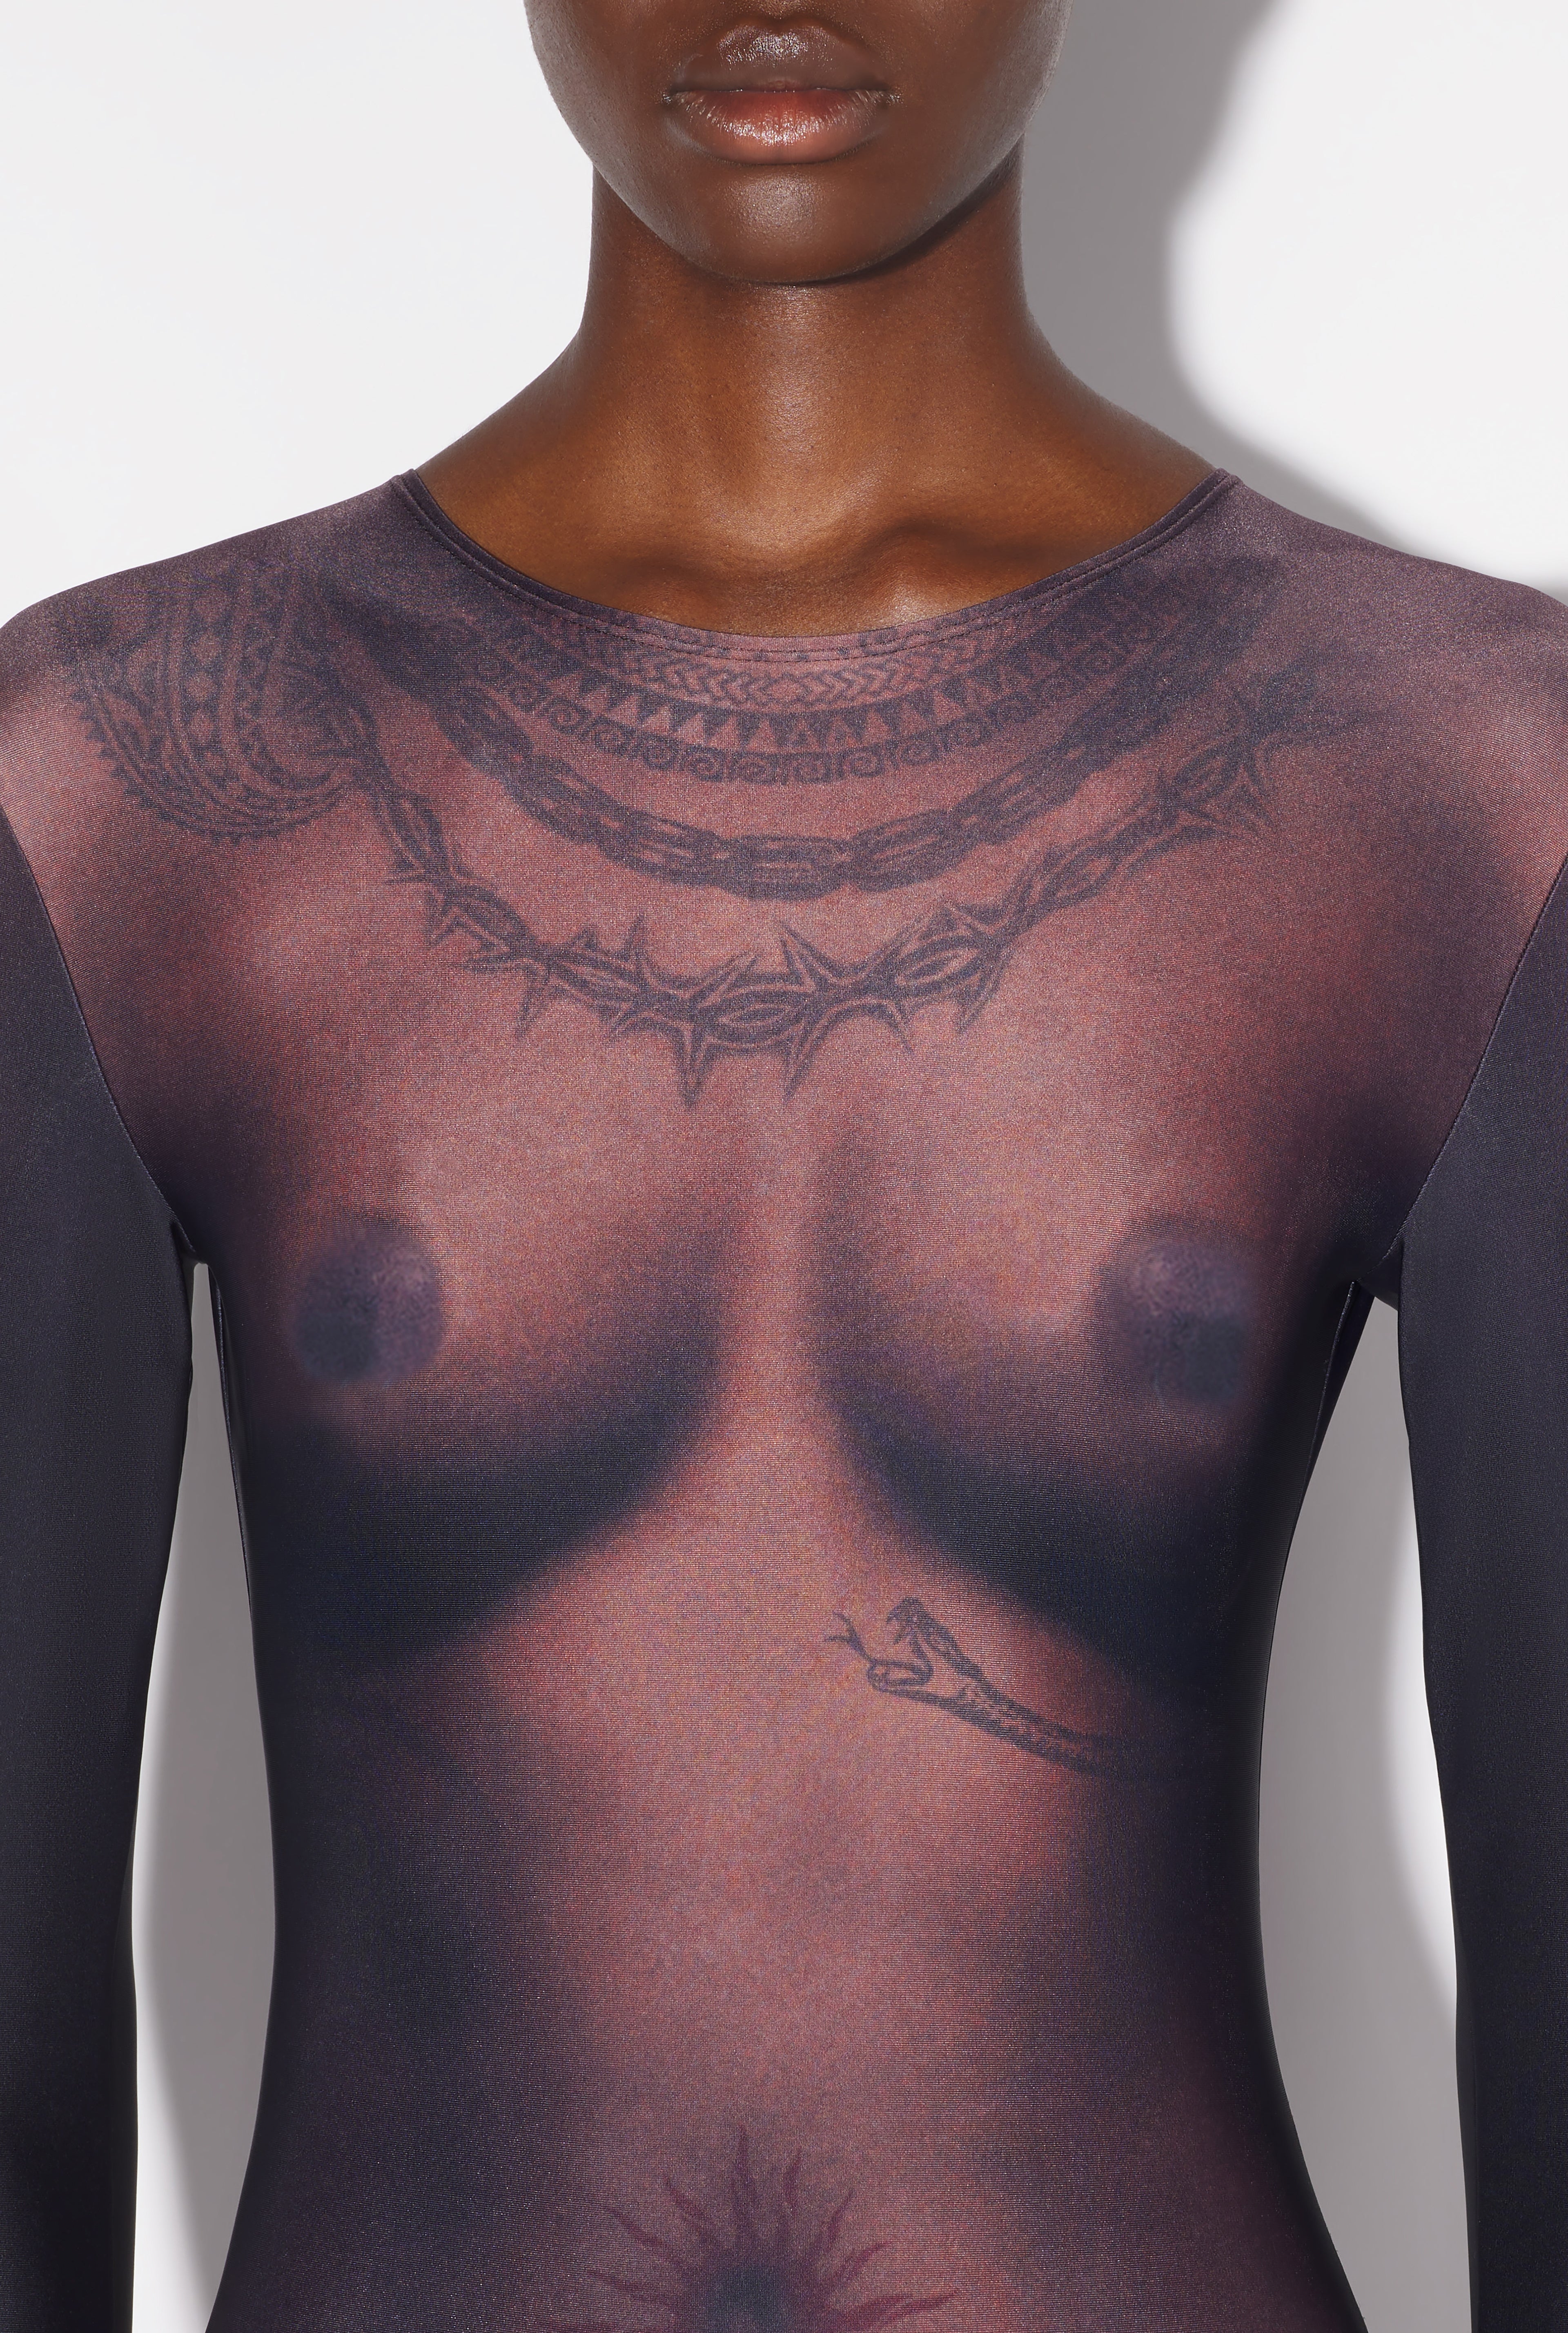 The Ebony Body Tattoo Jumpsuit